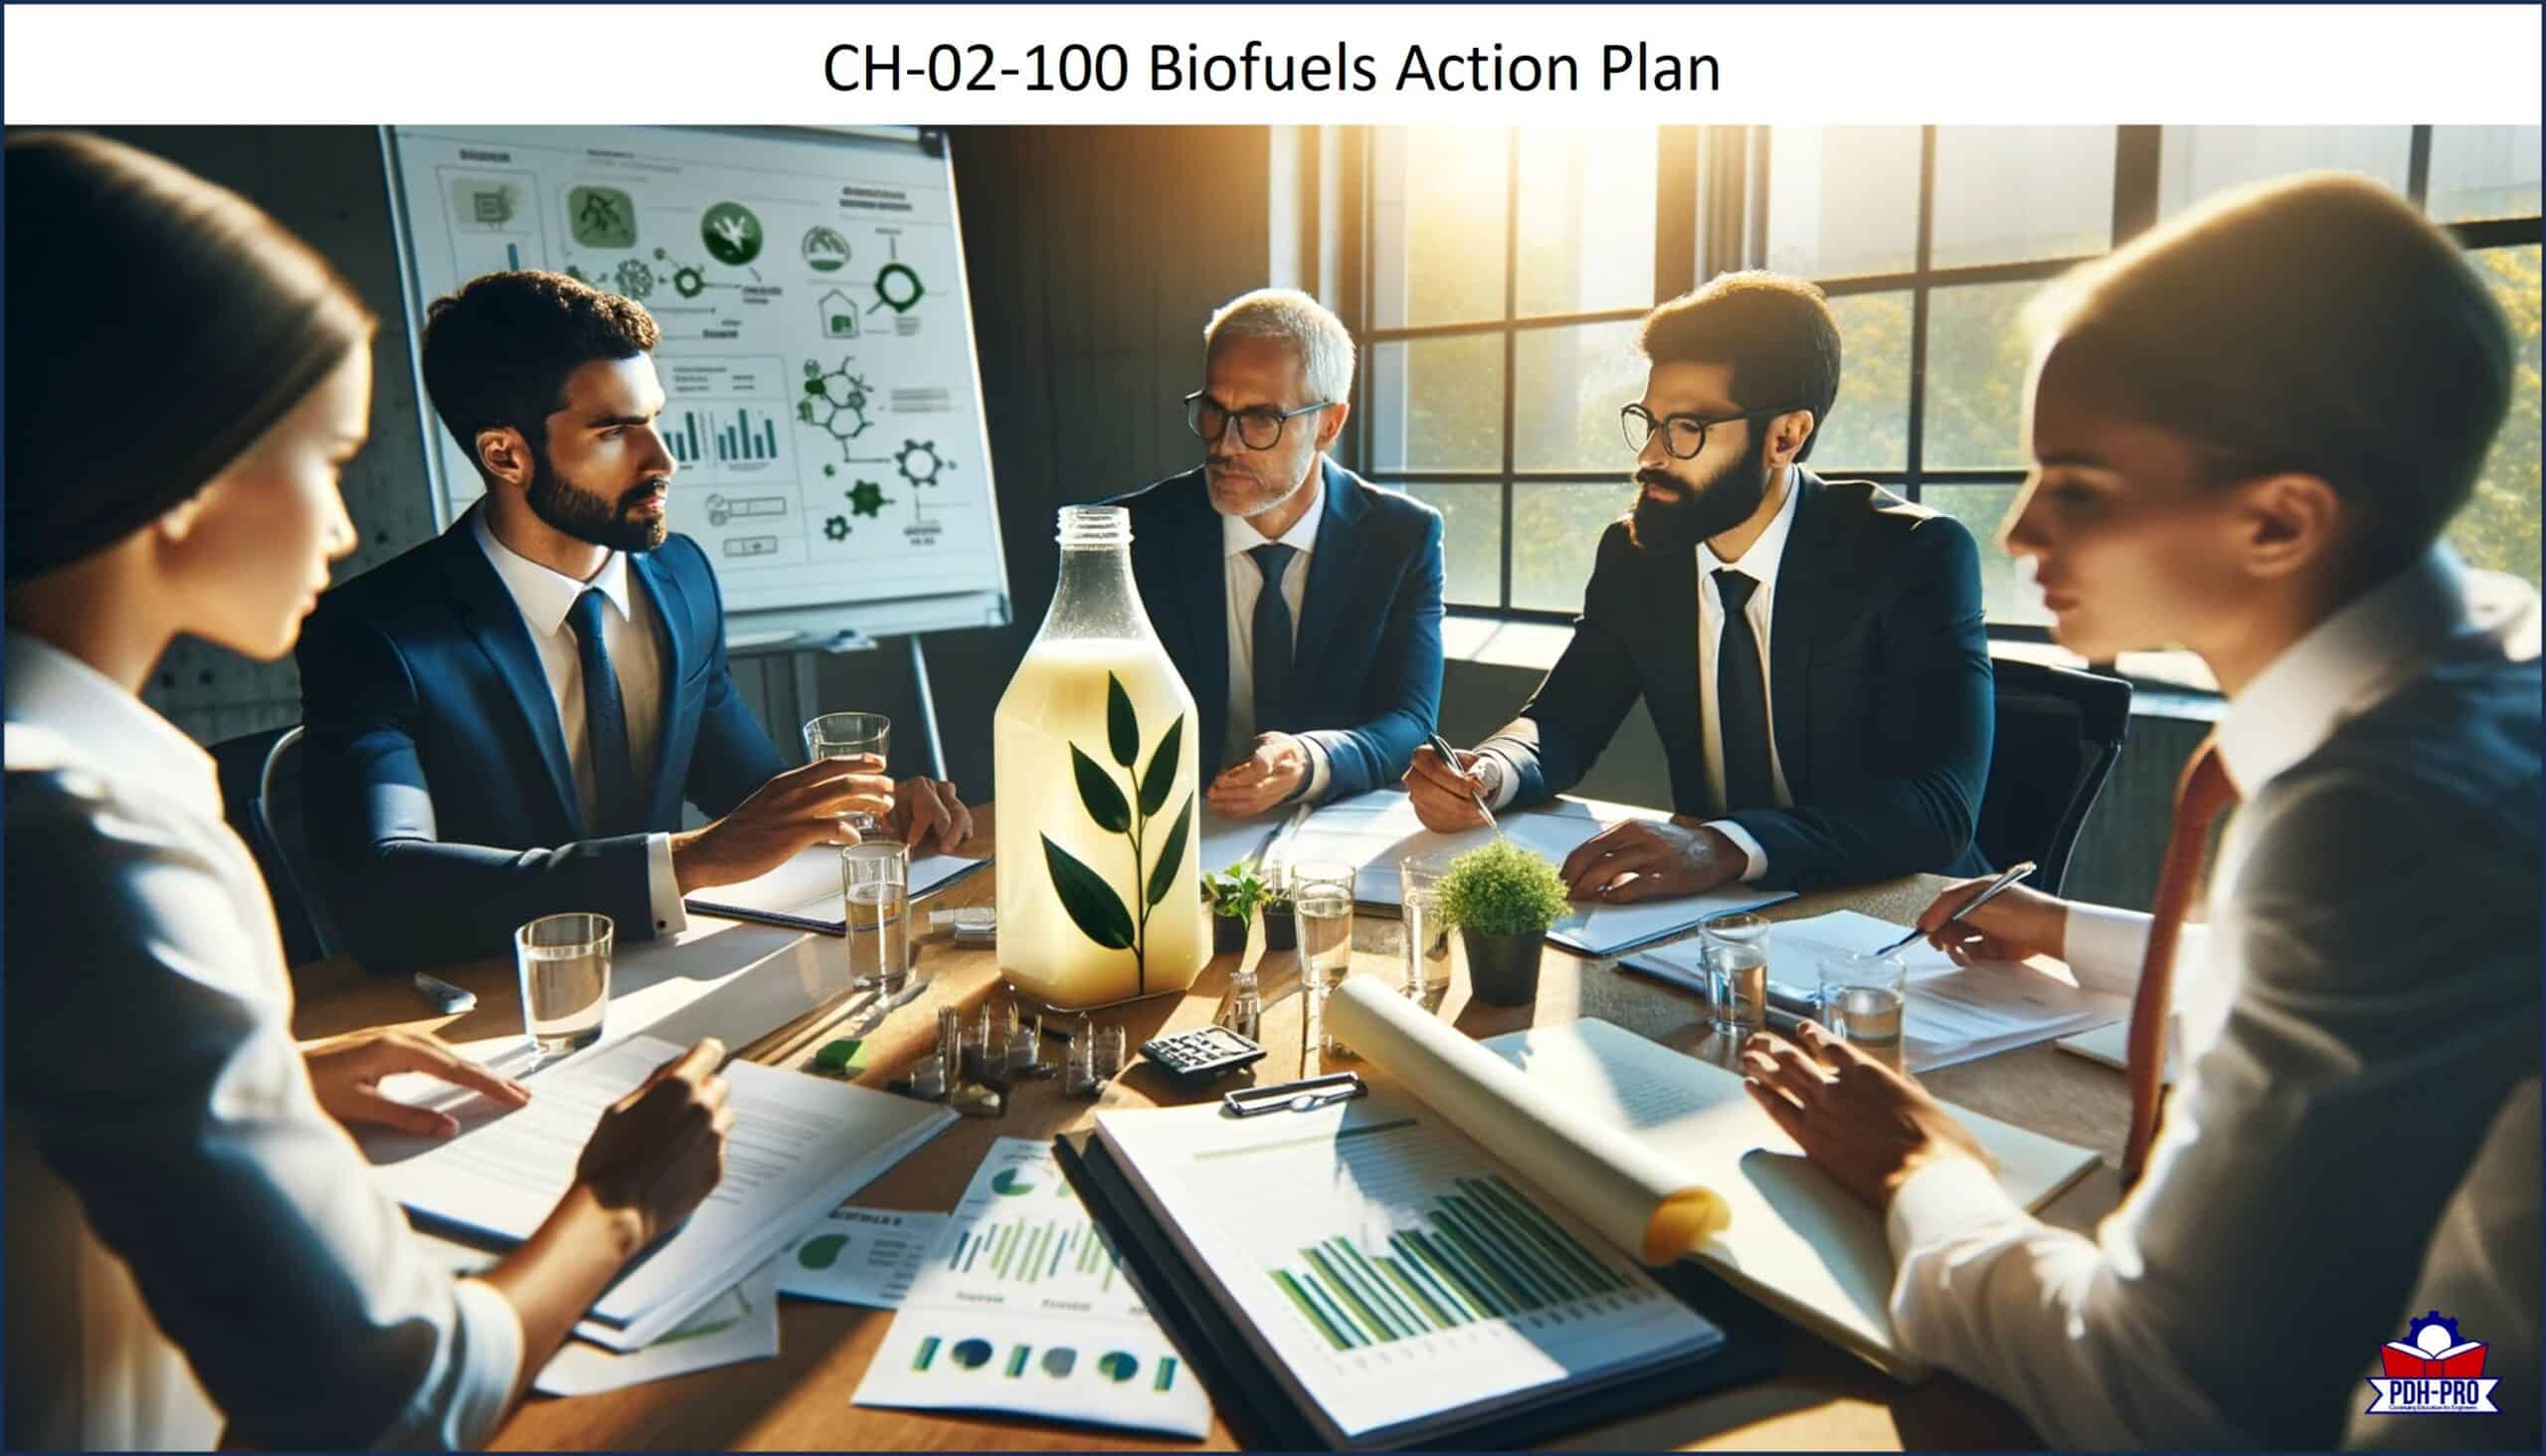 Biofuels Action Plan